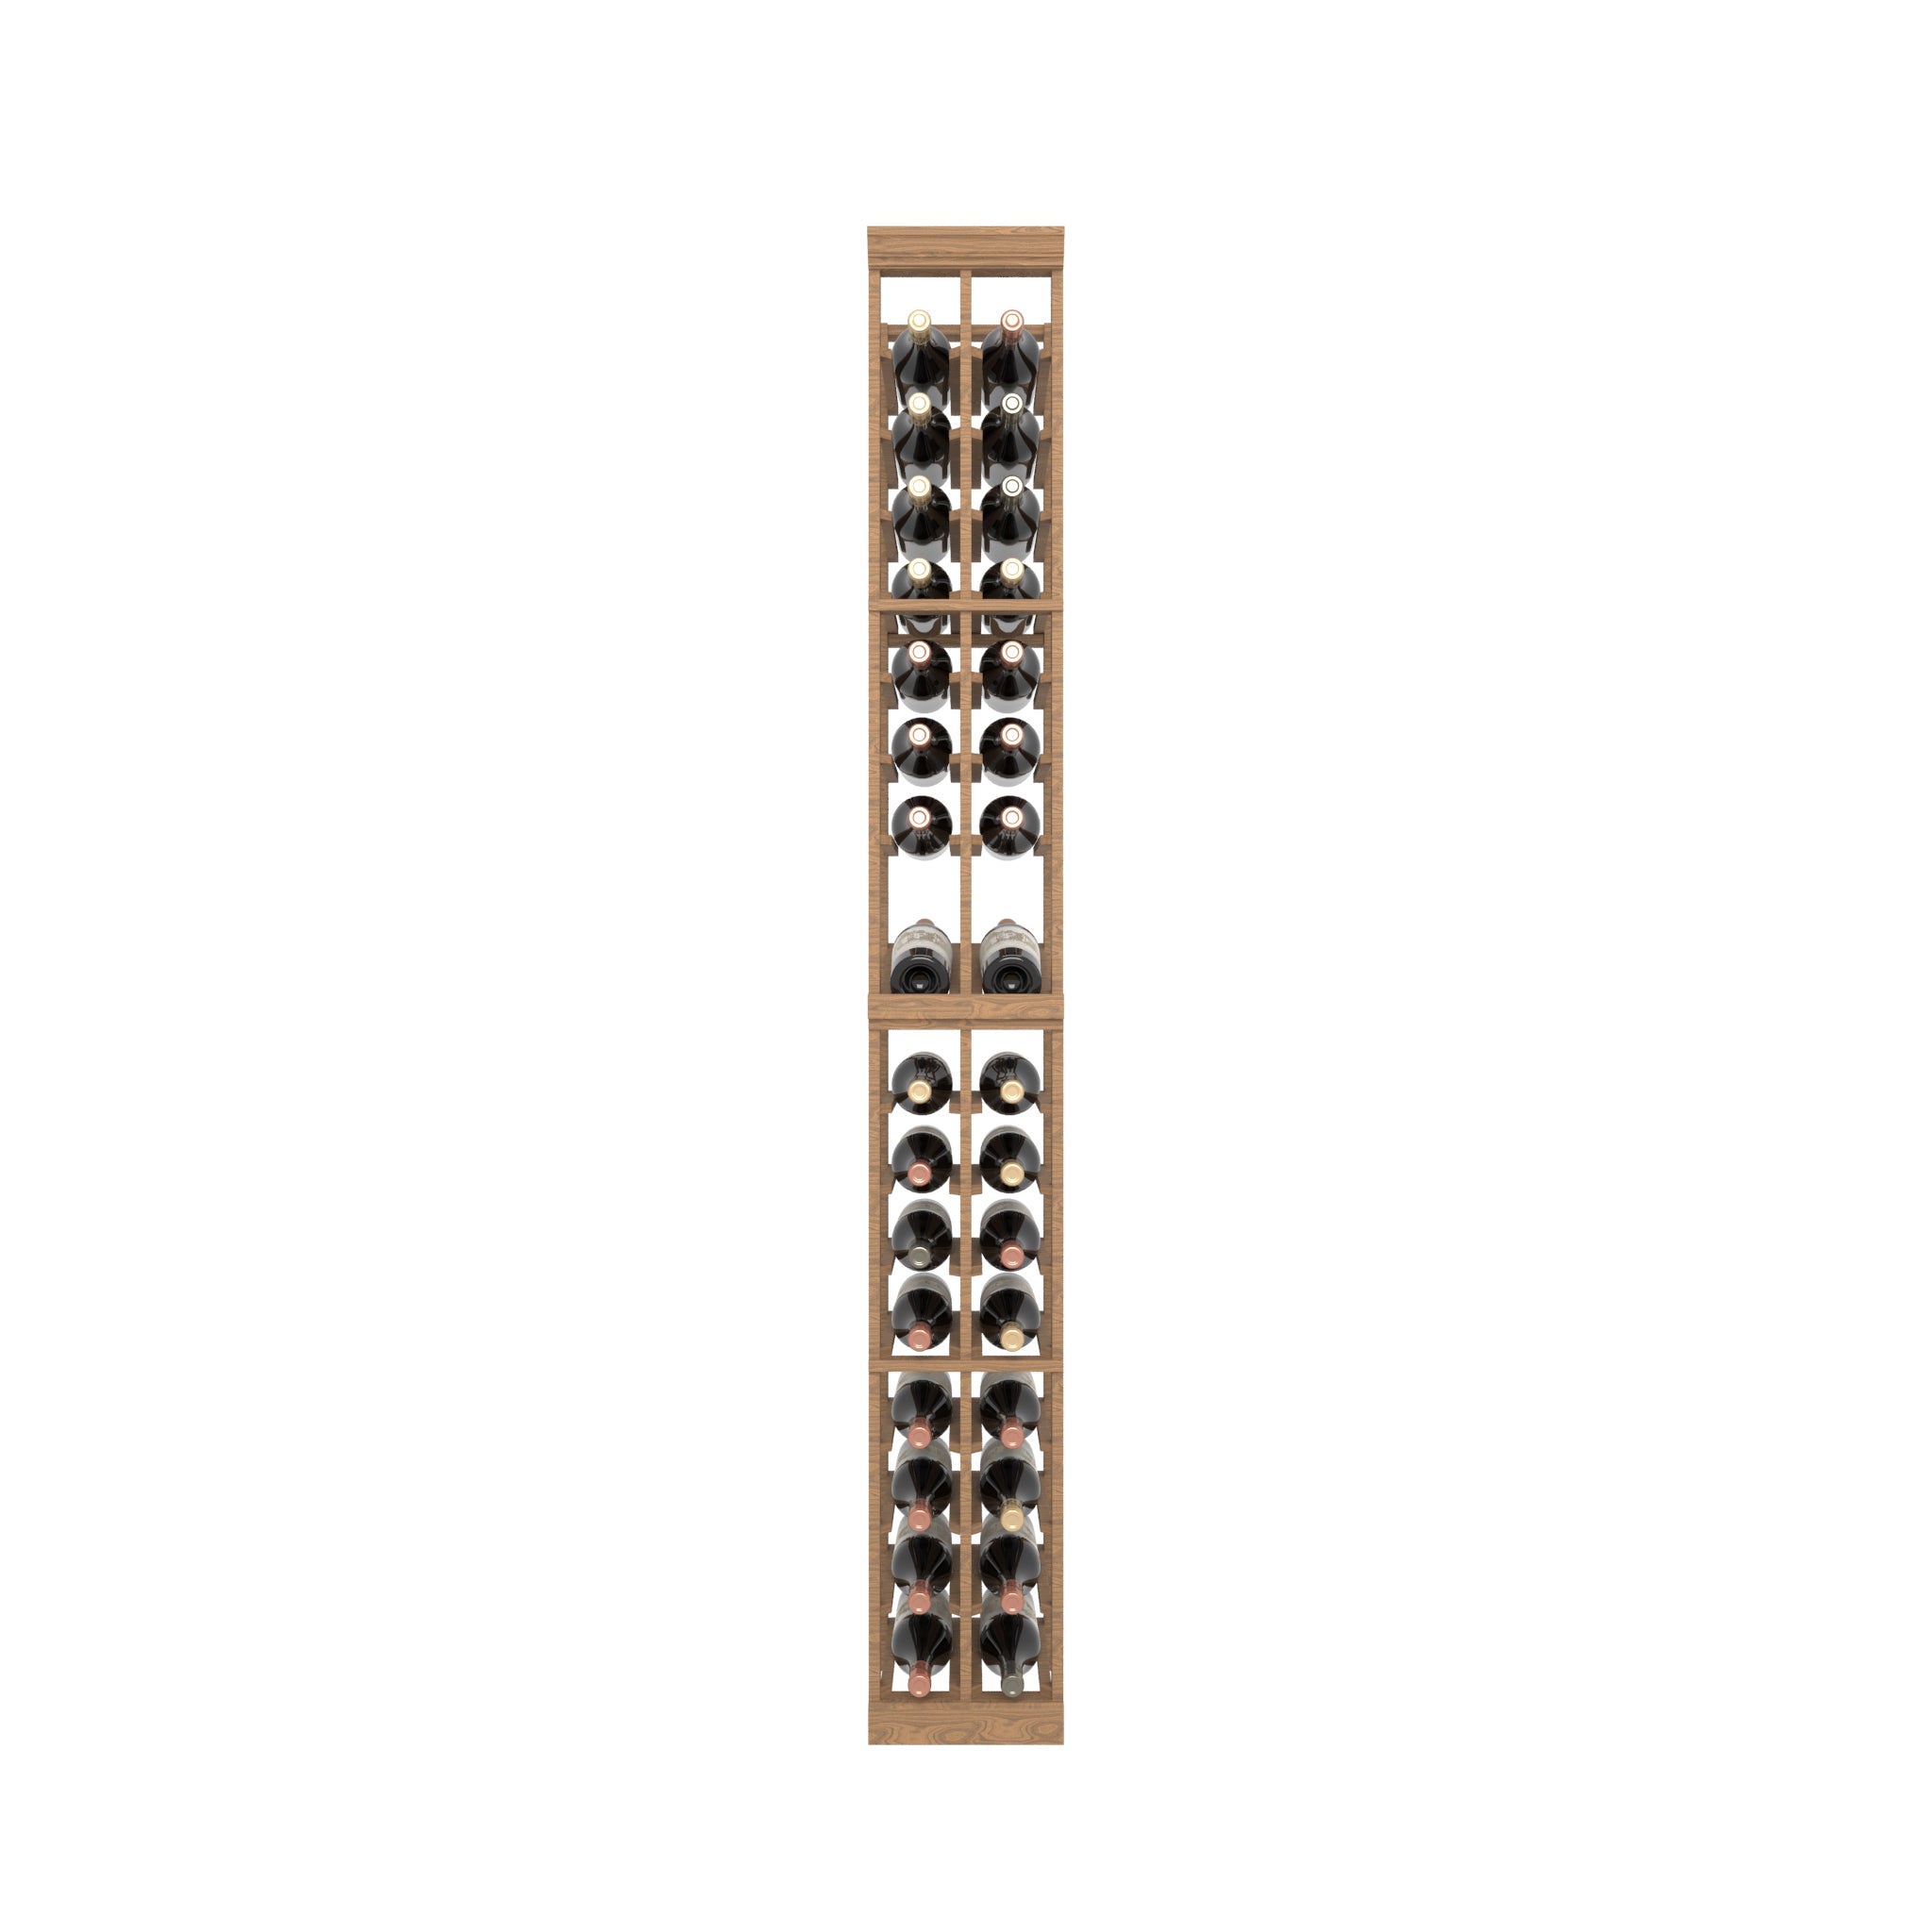 02 Column Rack with Display Row - Magnum Bottles